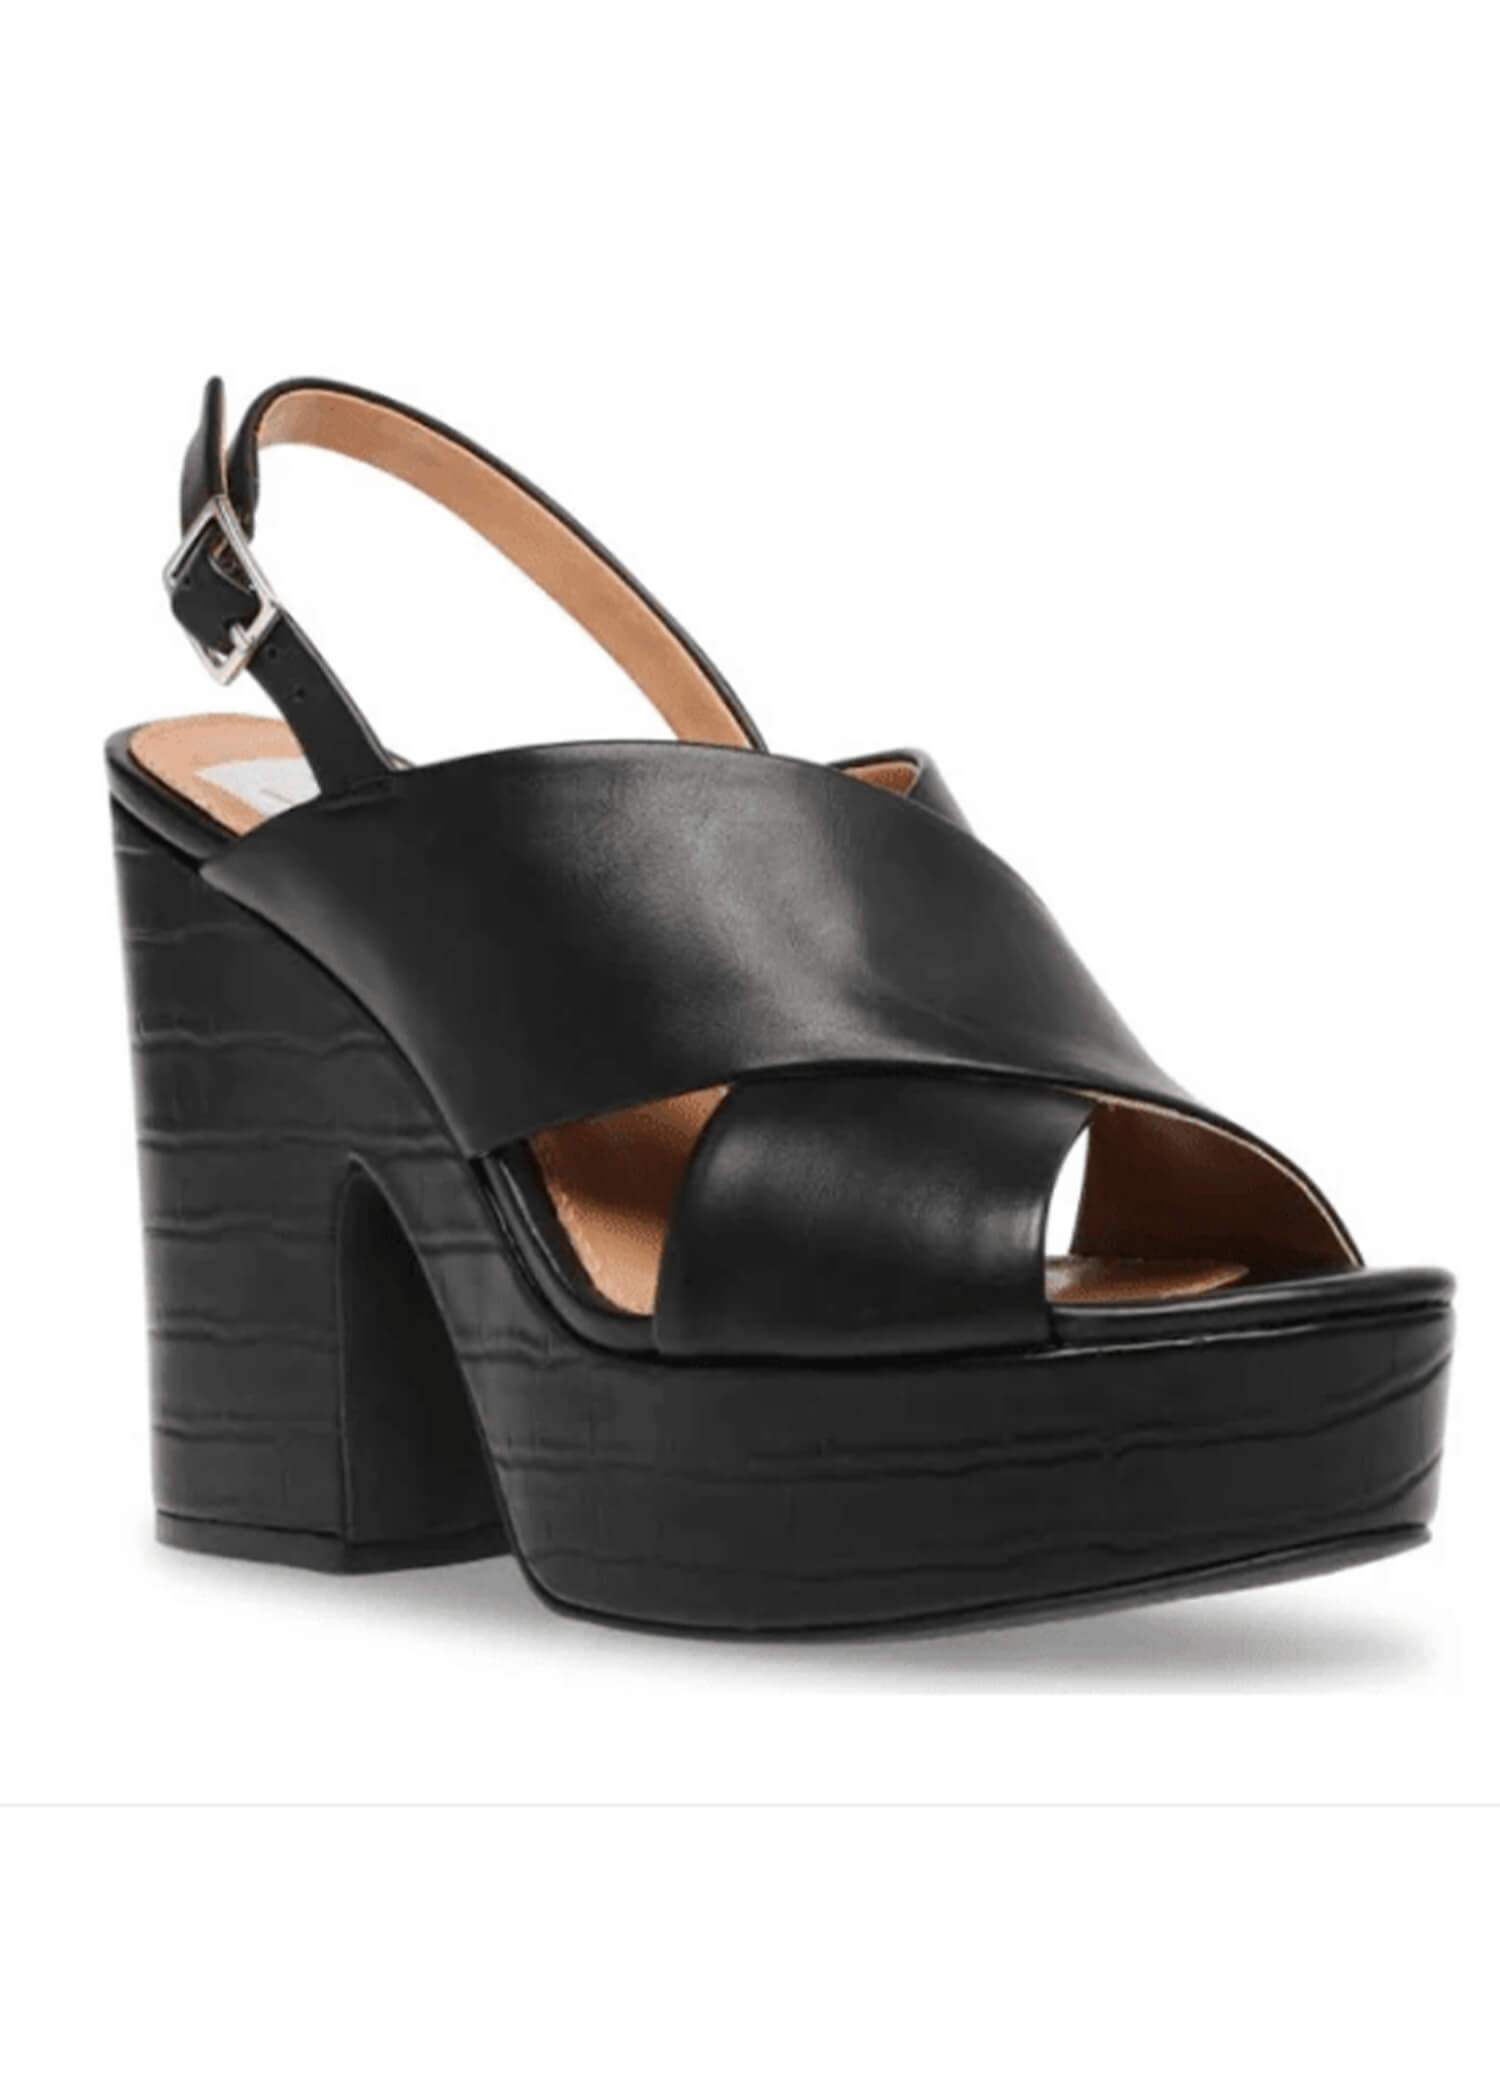 Ready For It Platform Wedge Sandals - Black Shoes MerciGrace Boutique.